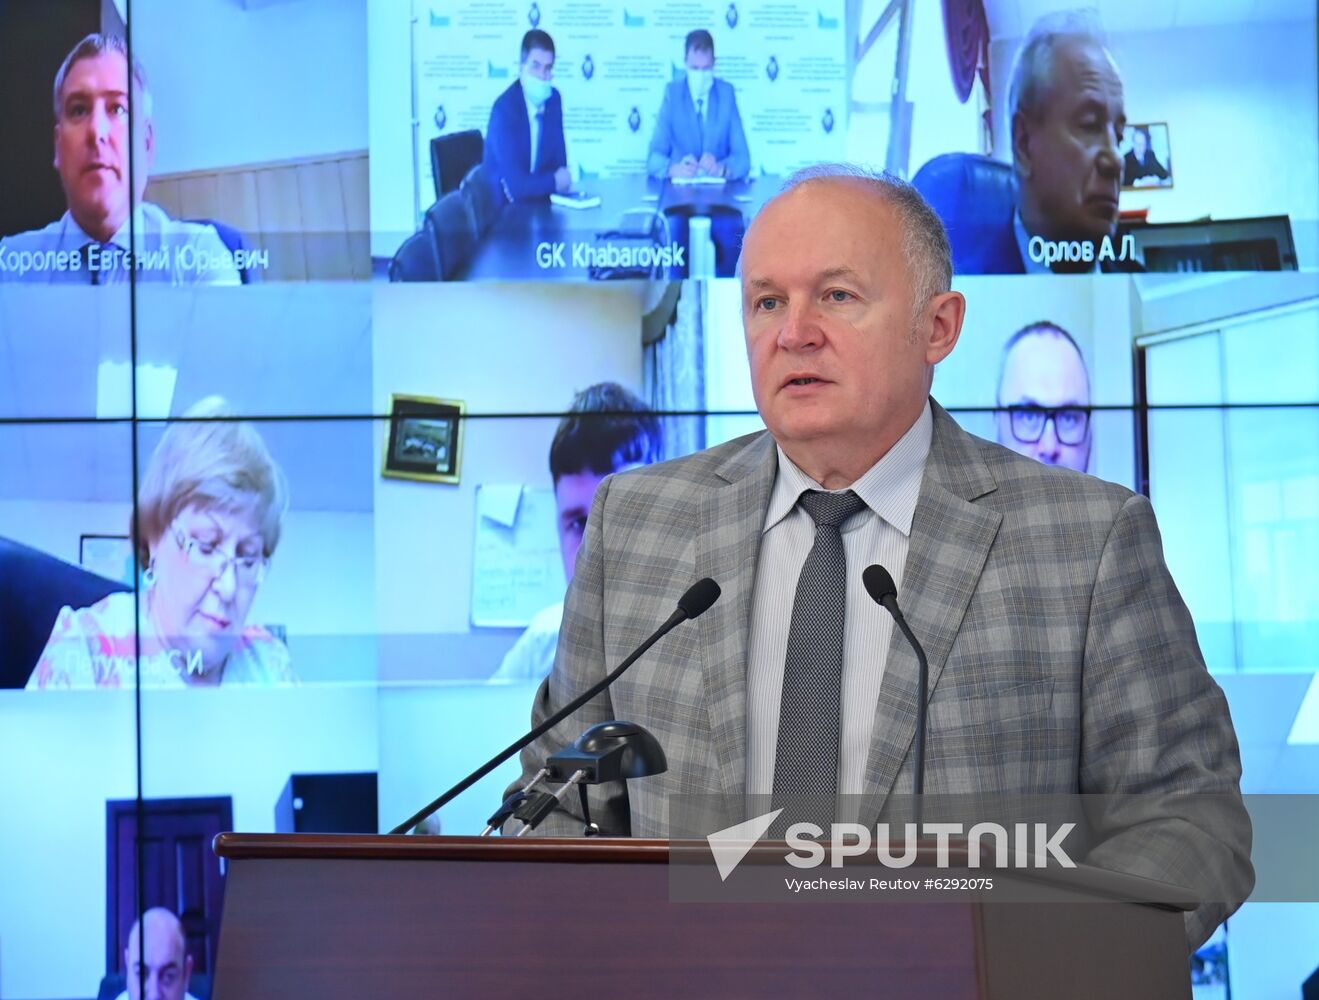 Russia New Khabarovsk Region Governor